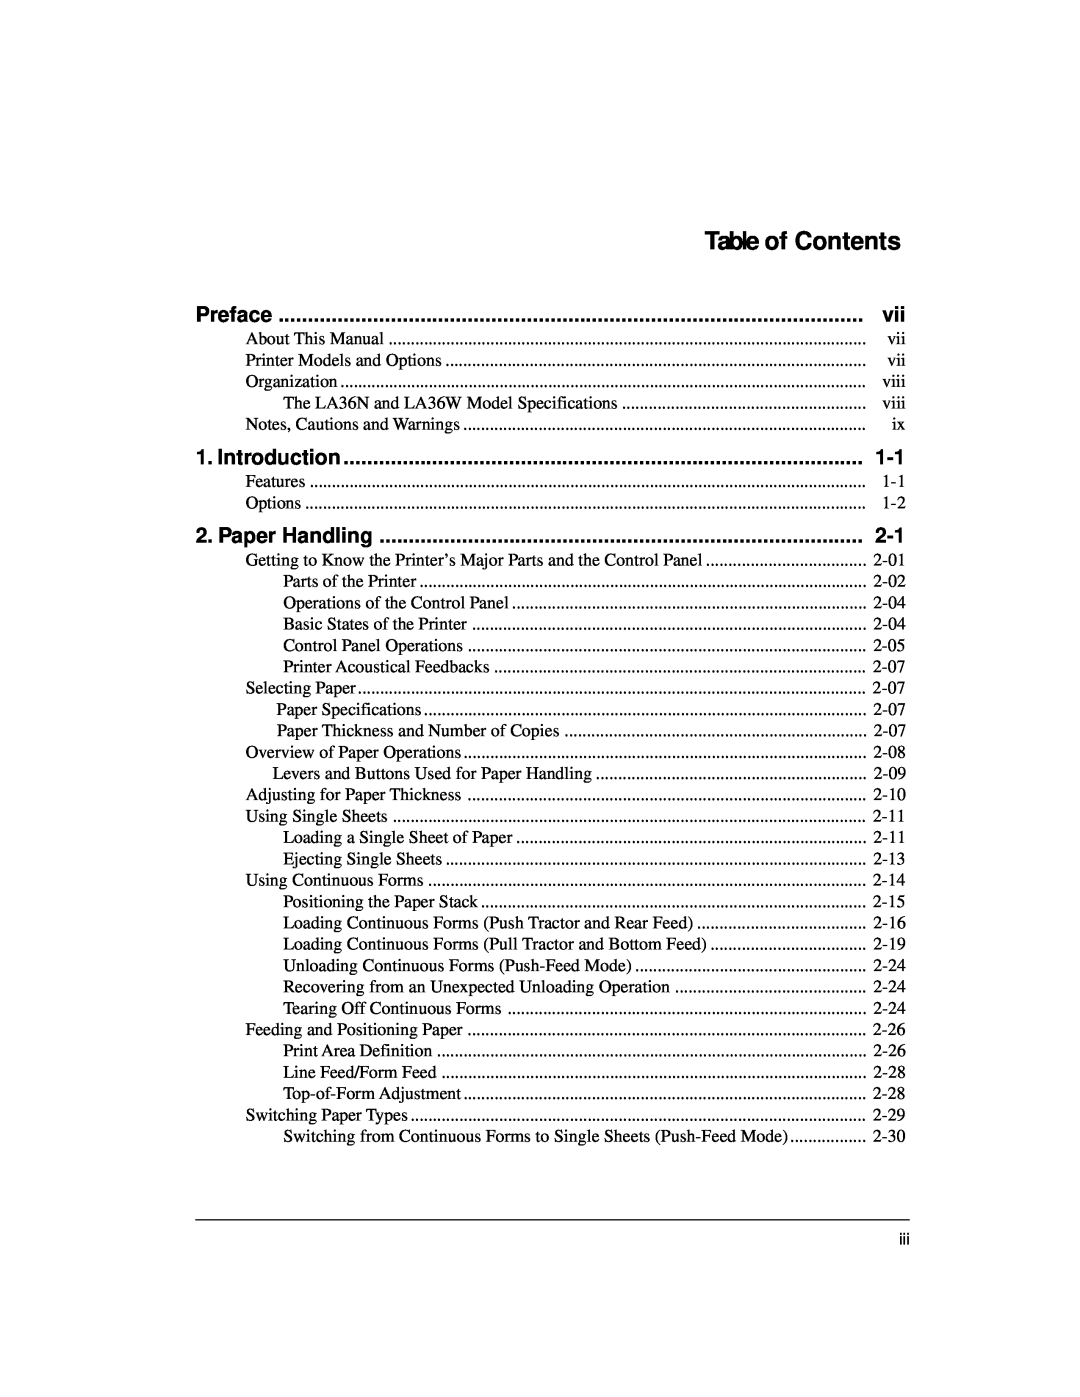 Genicom LA36 manual Table of Contents, Introduction, Paper Handling 